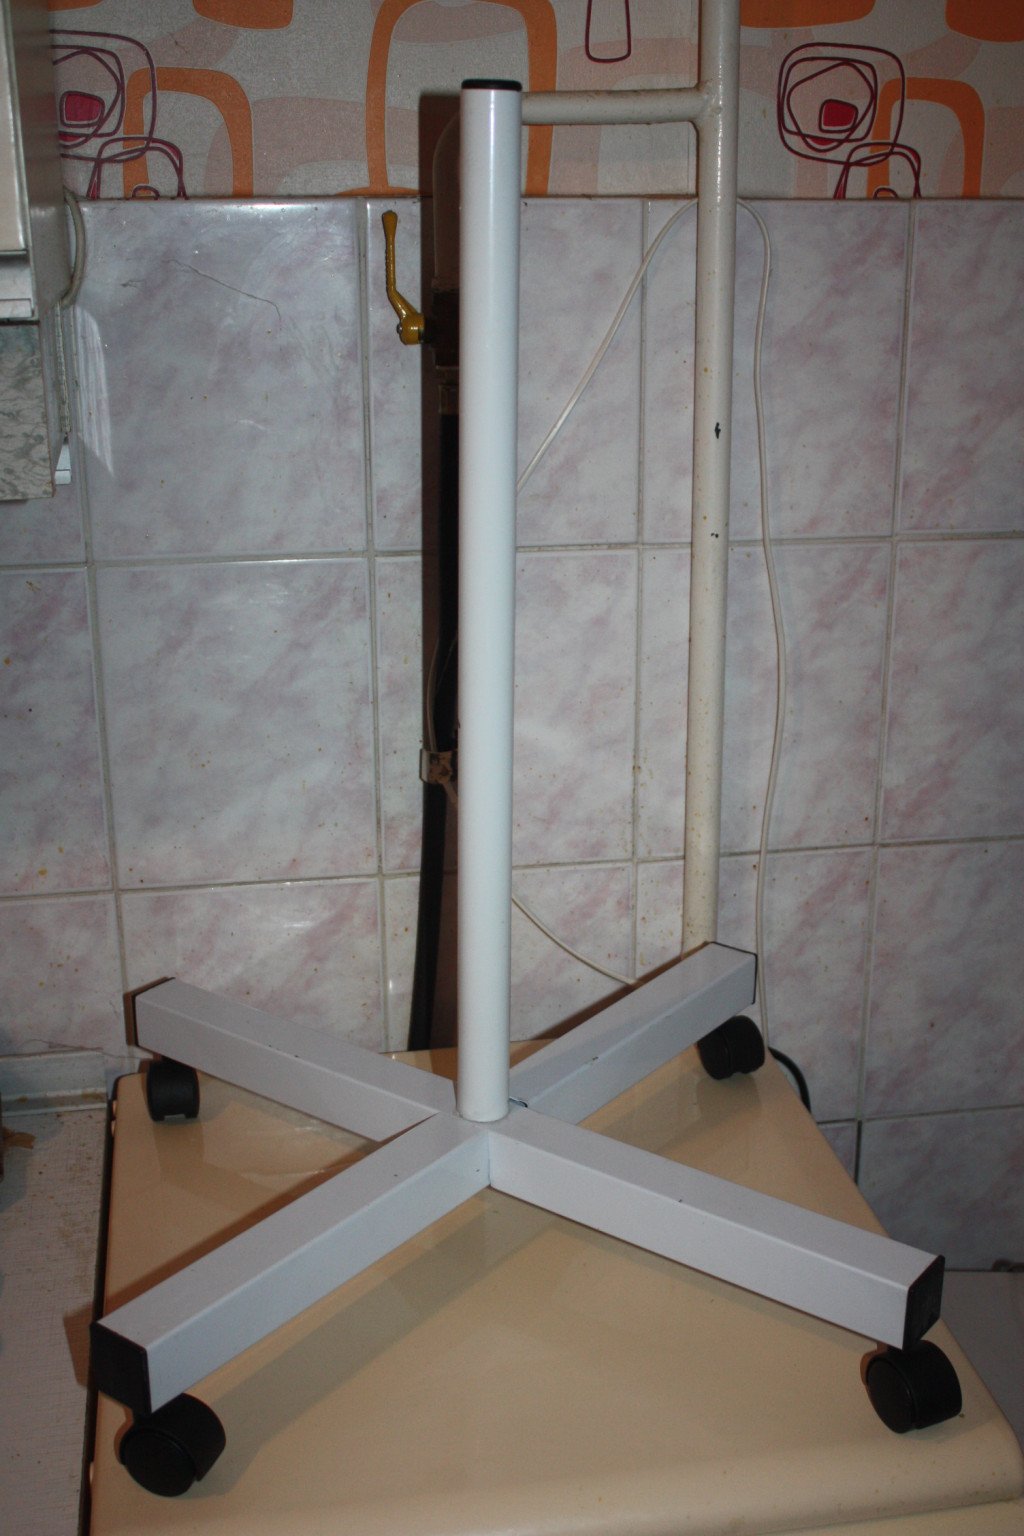 Монтажная лампа-лупа. Обзор, разбор и разгон с вольтмодом